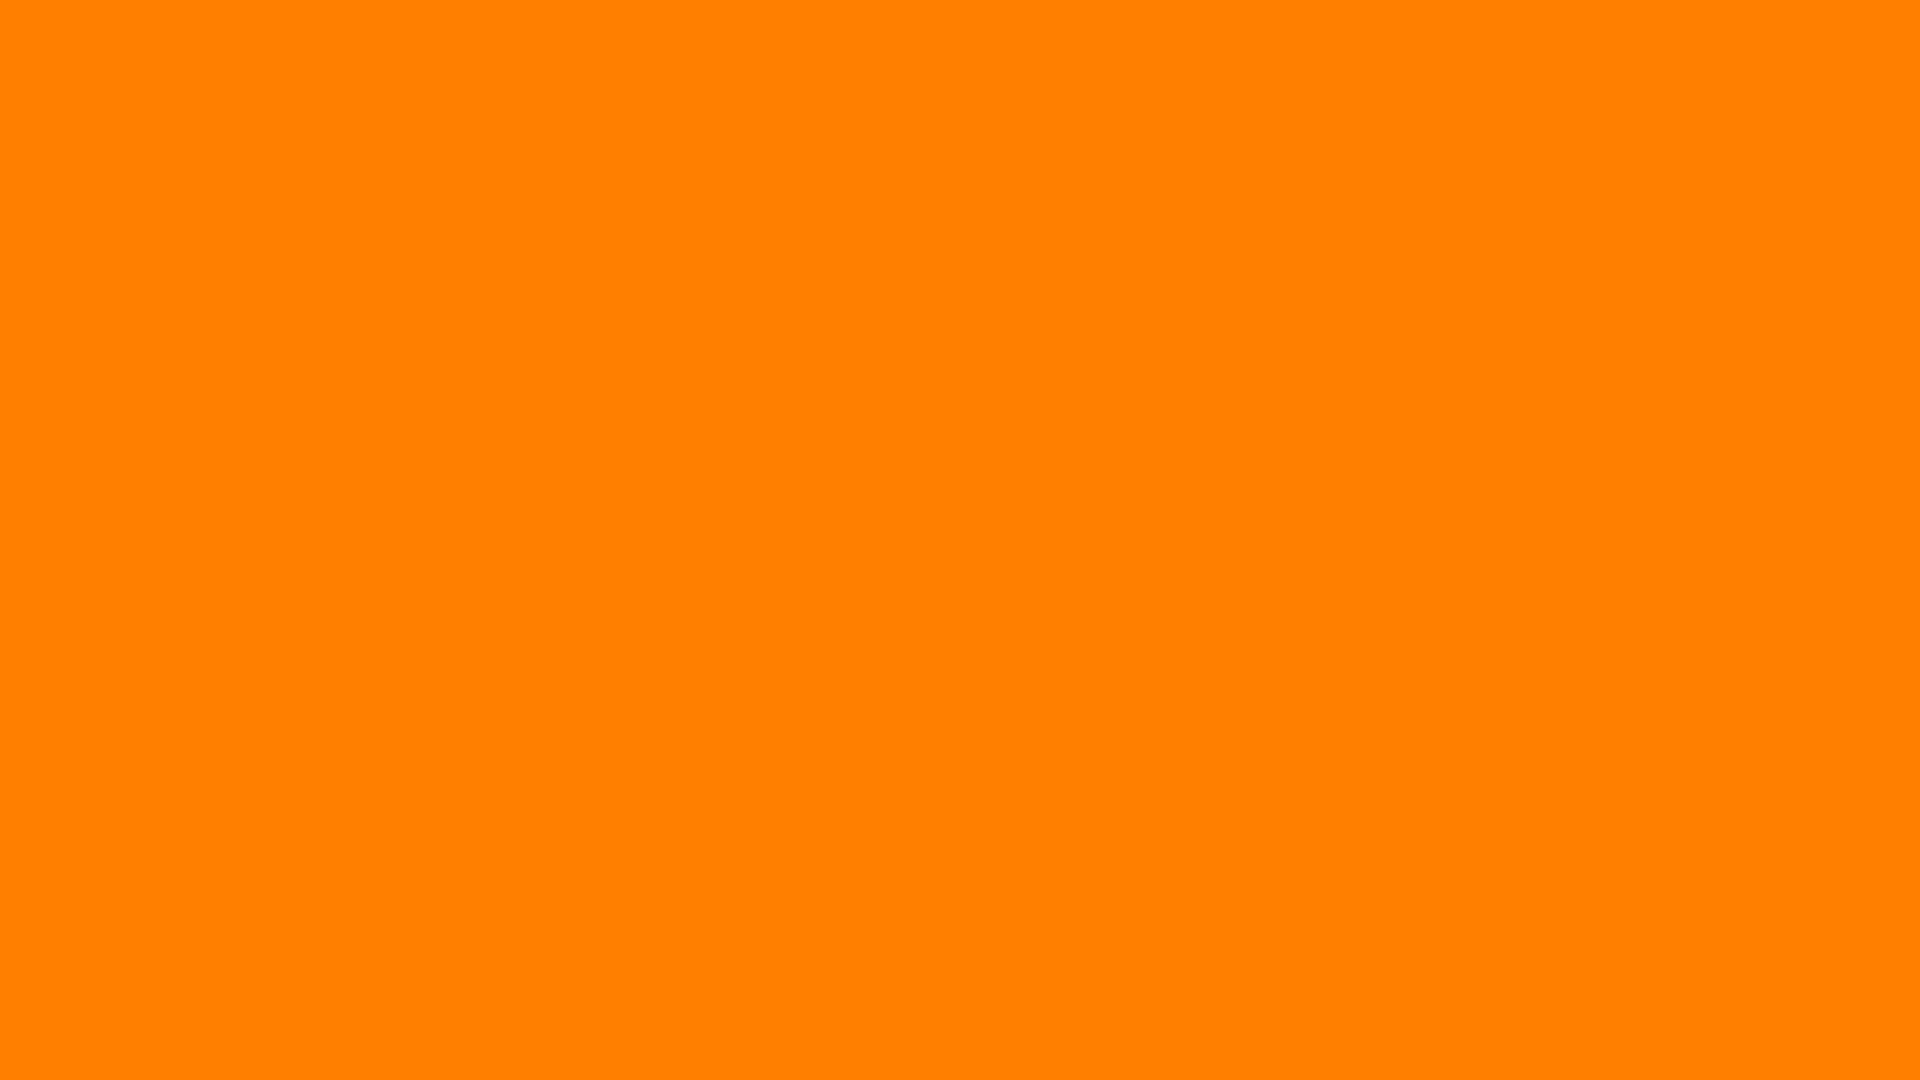 Premium Solid Color Orange Desktop Bakgrundsbild För Datorer. Wallpaper